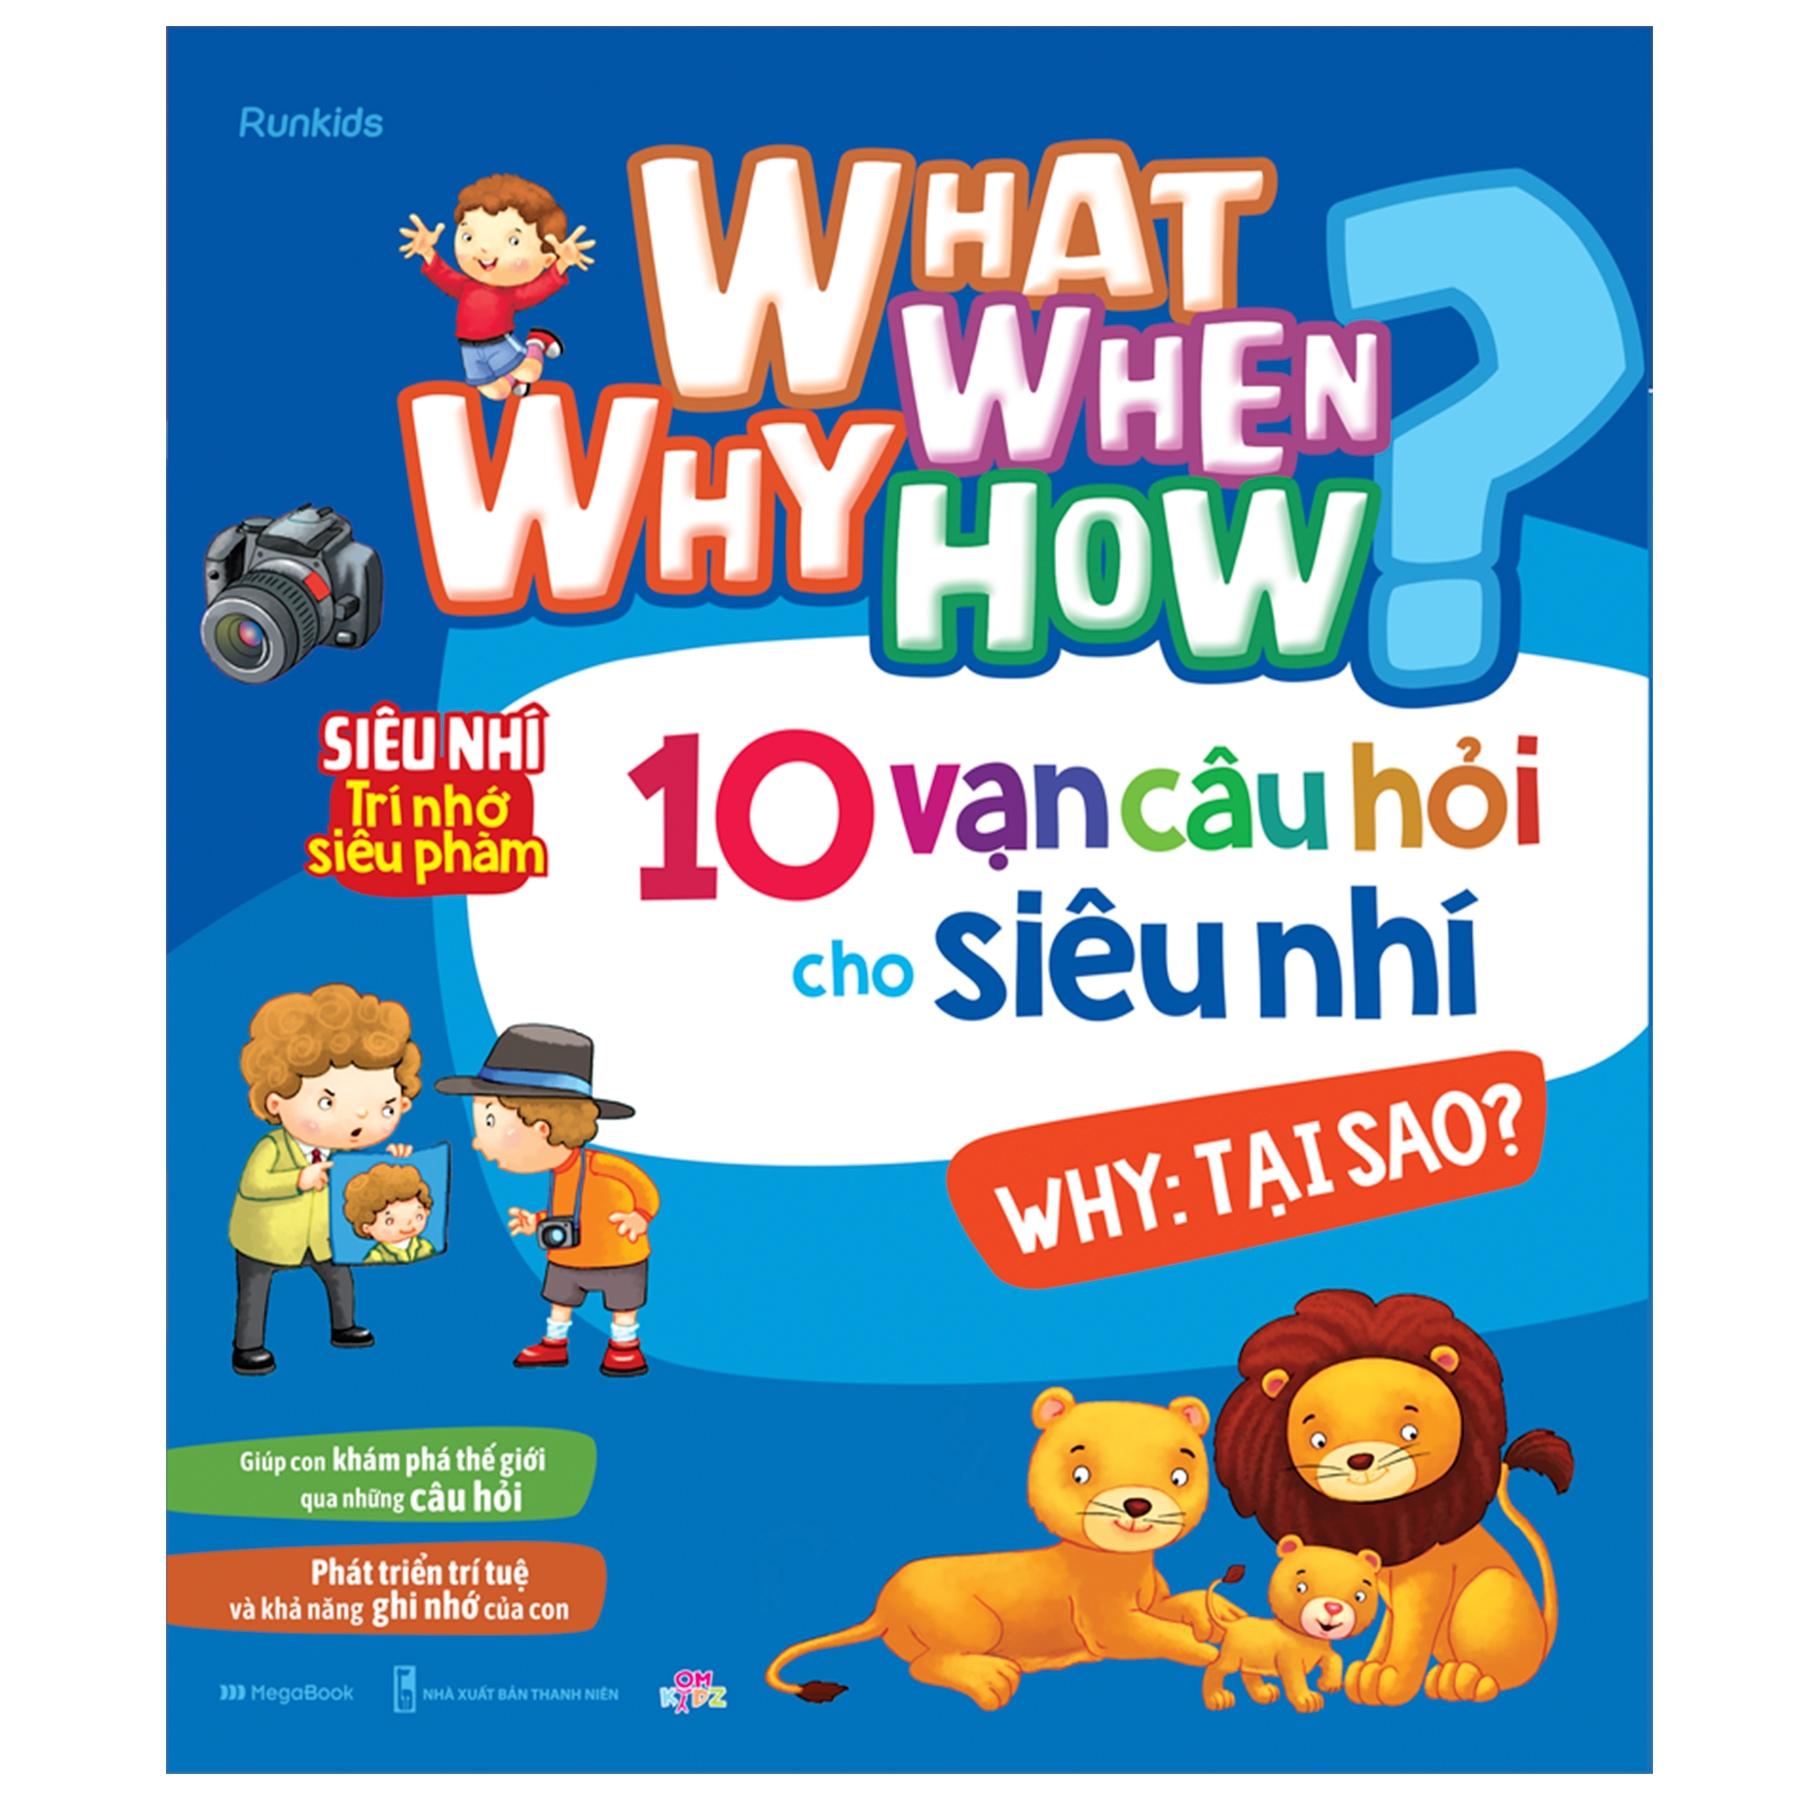 What Why When How? - 10 Vạn Câu Hỏi Cho Siêu Nhí - Why: Tại Sao?